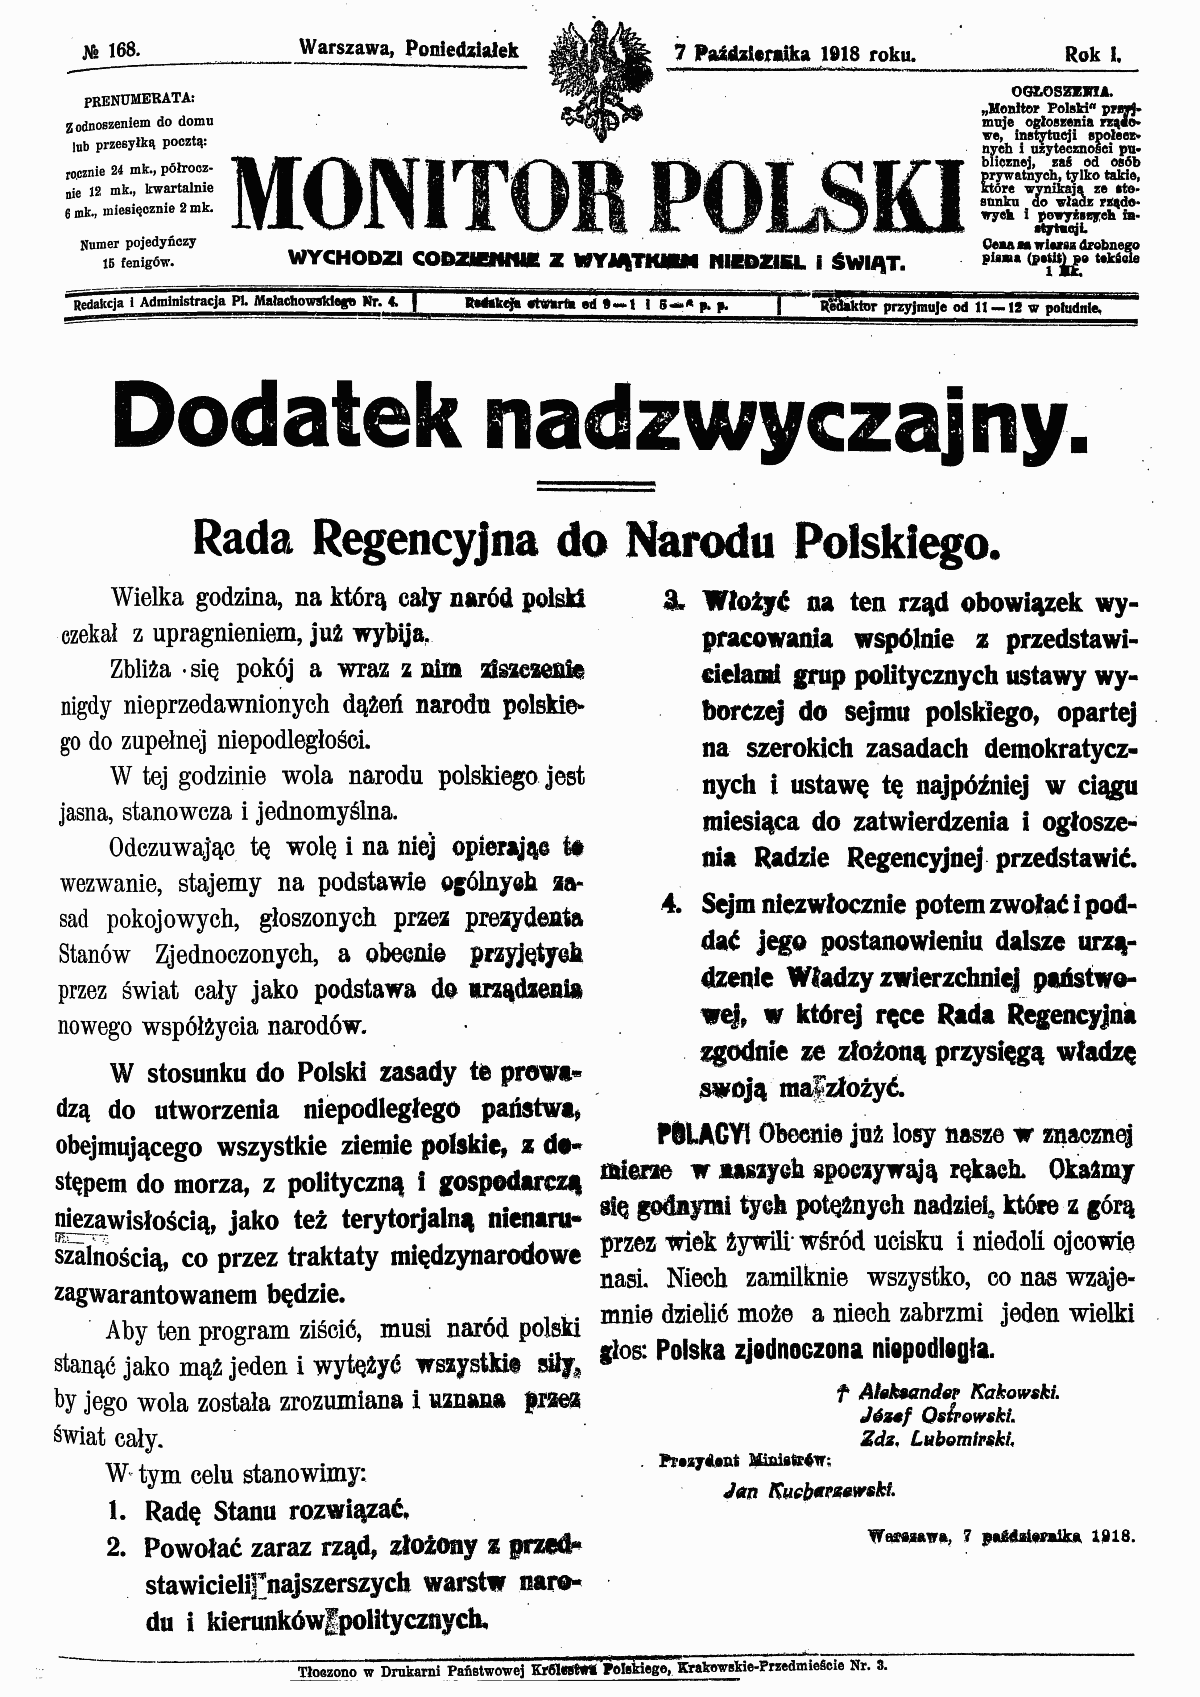 Monitor polski 7 pac5badziernika 1918